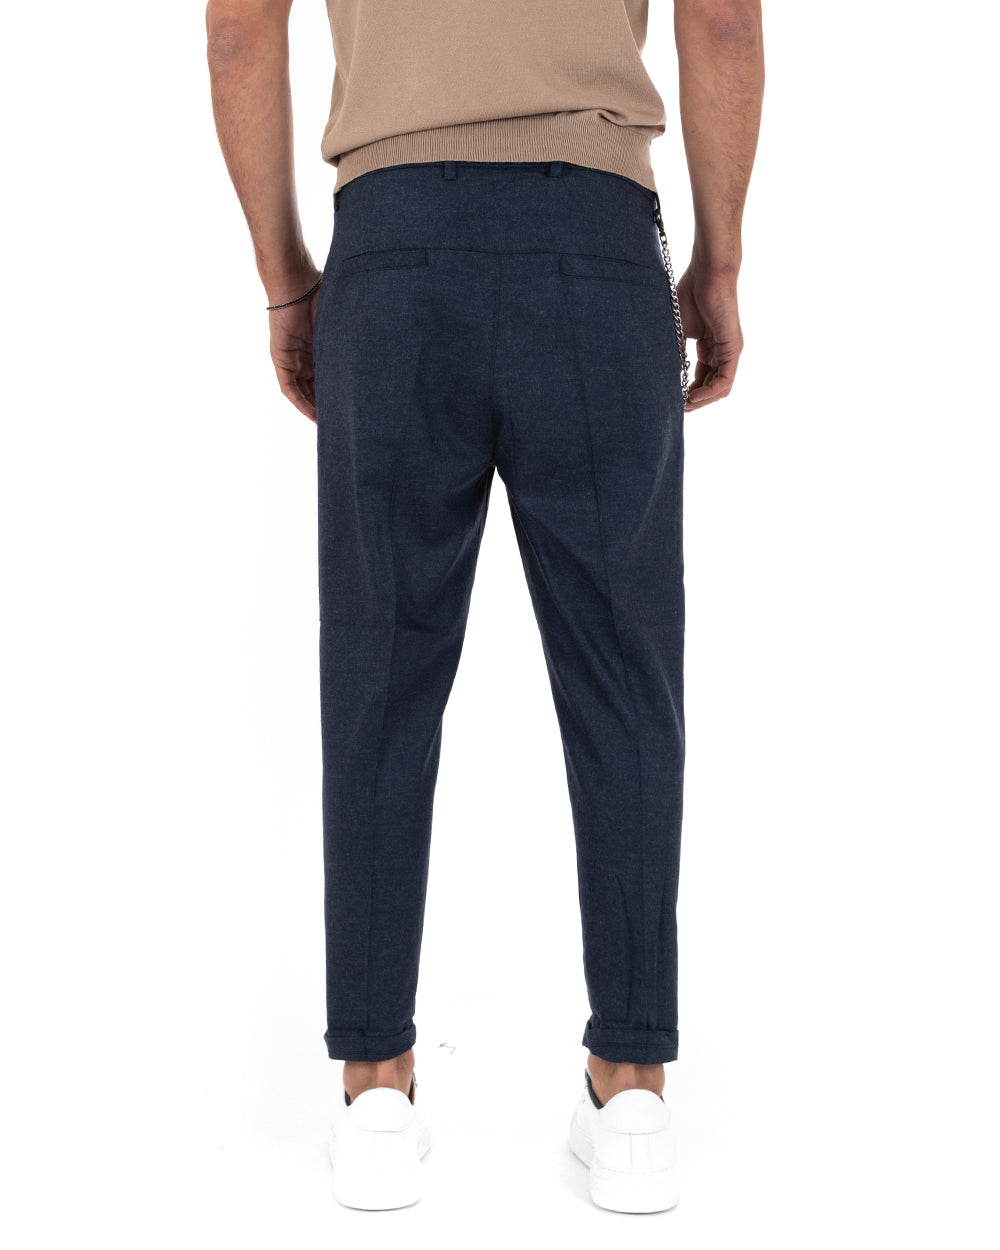 Pantaloni Uomo Lungo Tasca America Classico Viscosa Blu Melangiato Casual GIOSAL-P5739A